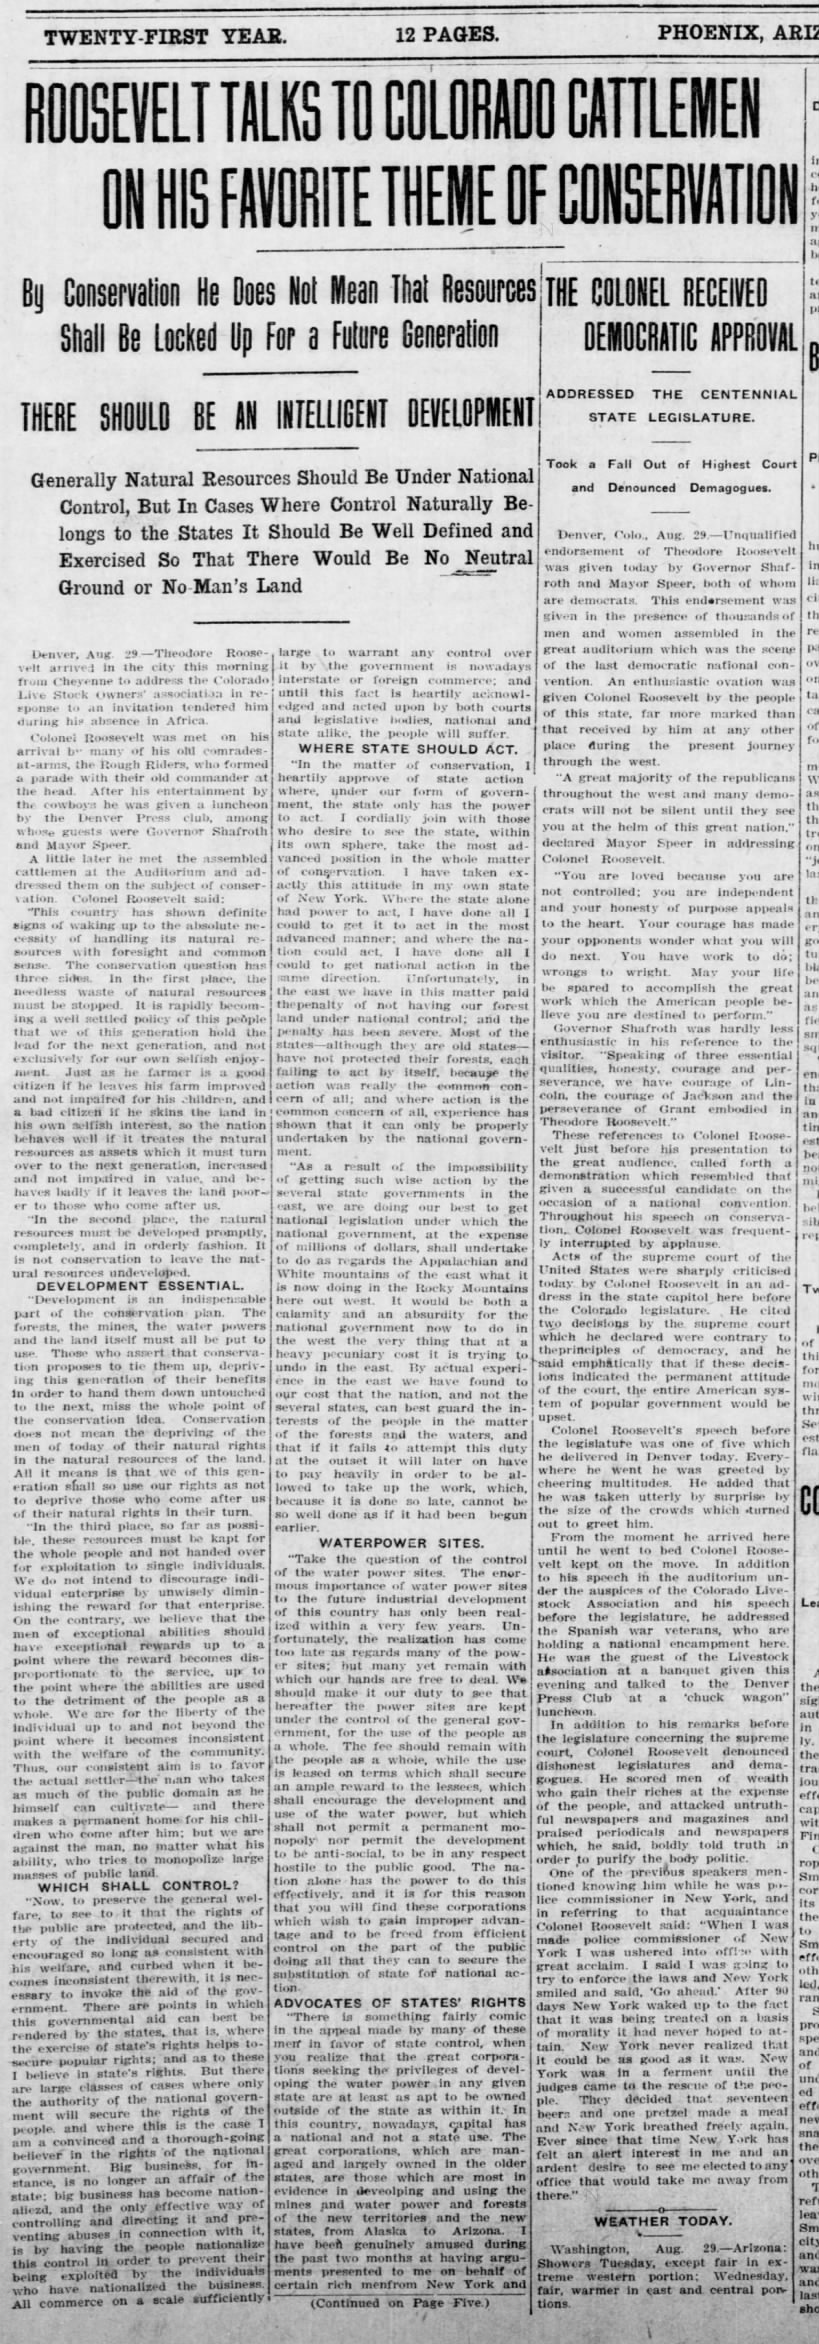 The Arizona Republican
(Phoenix, Arizona)
30 August 1910, p1